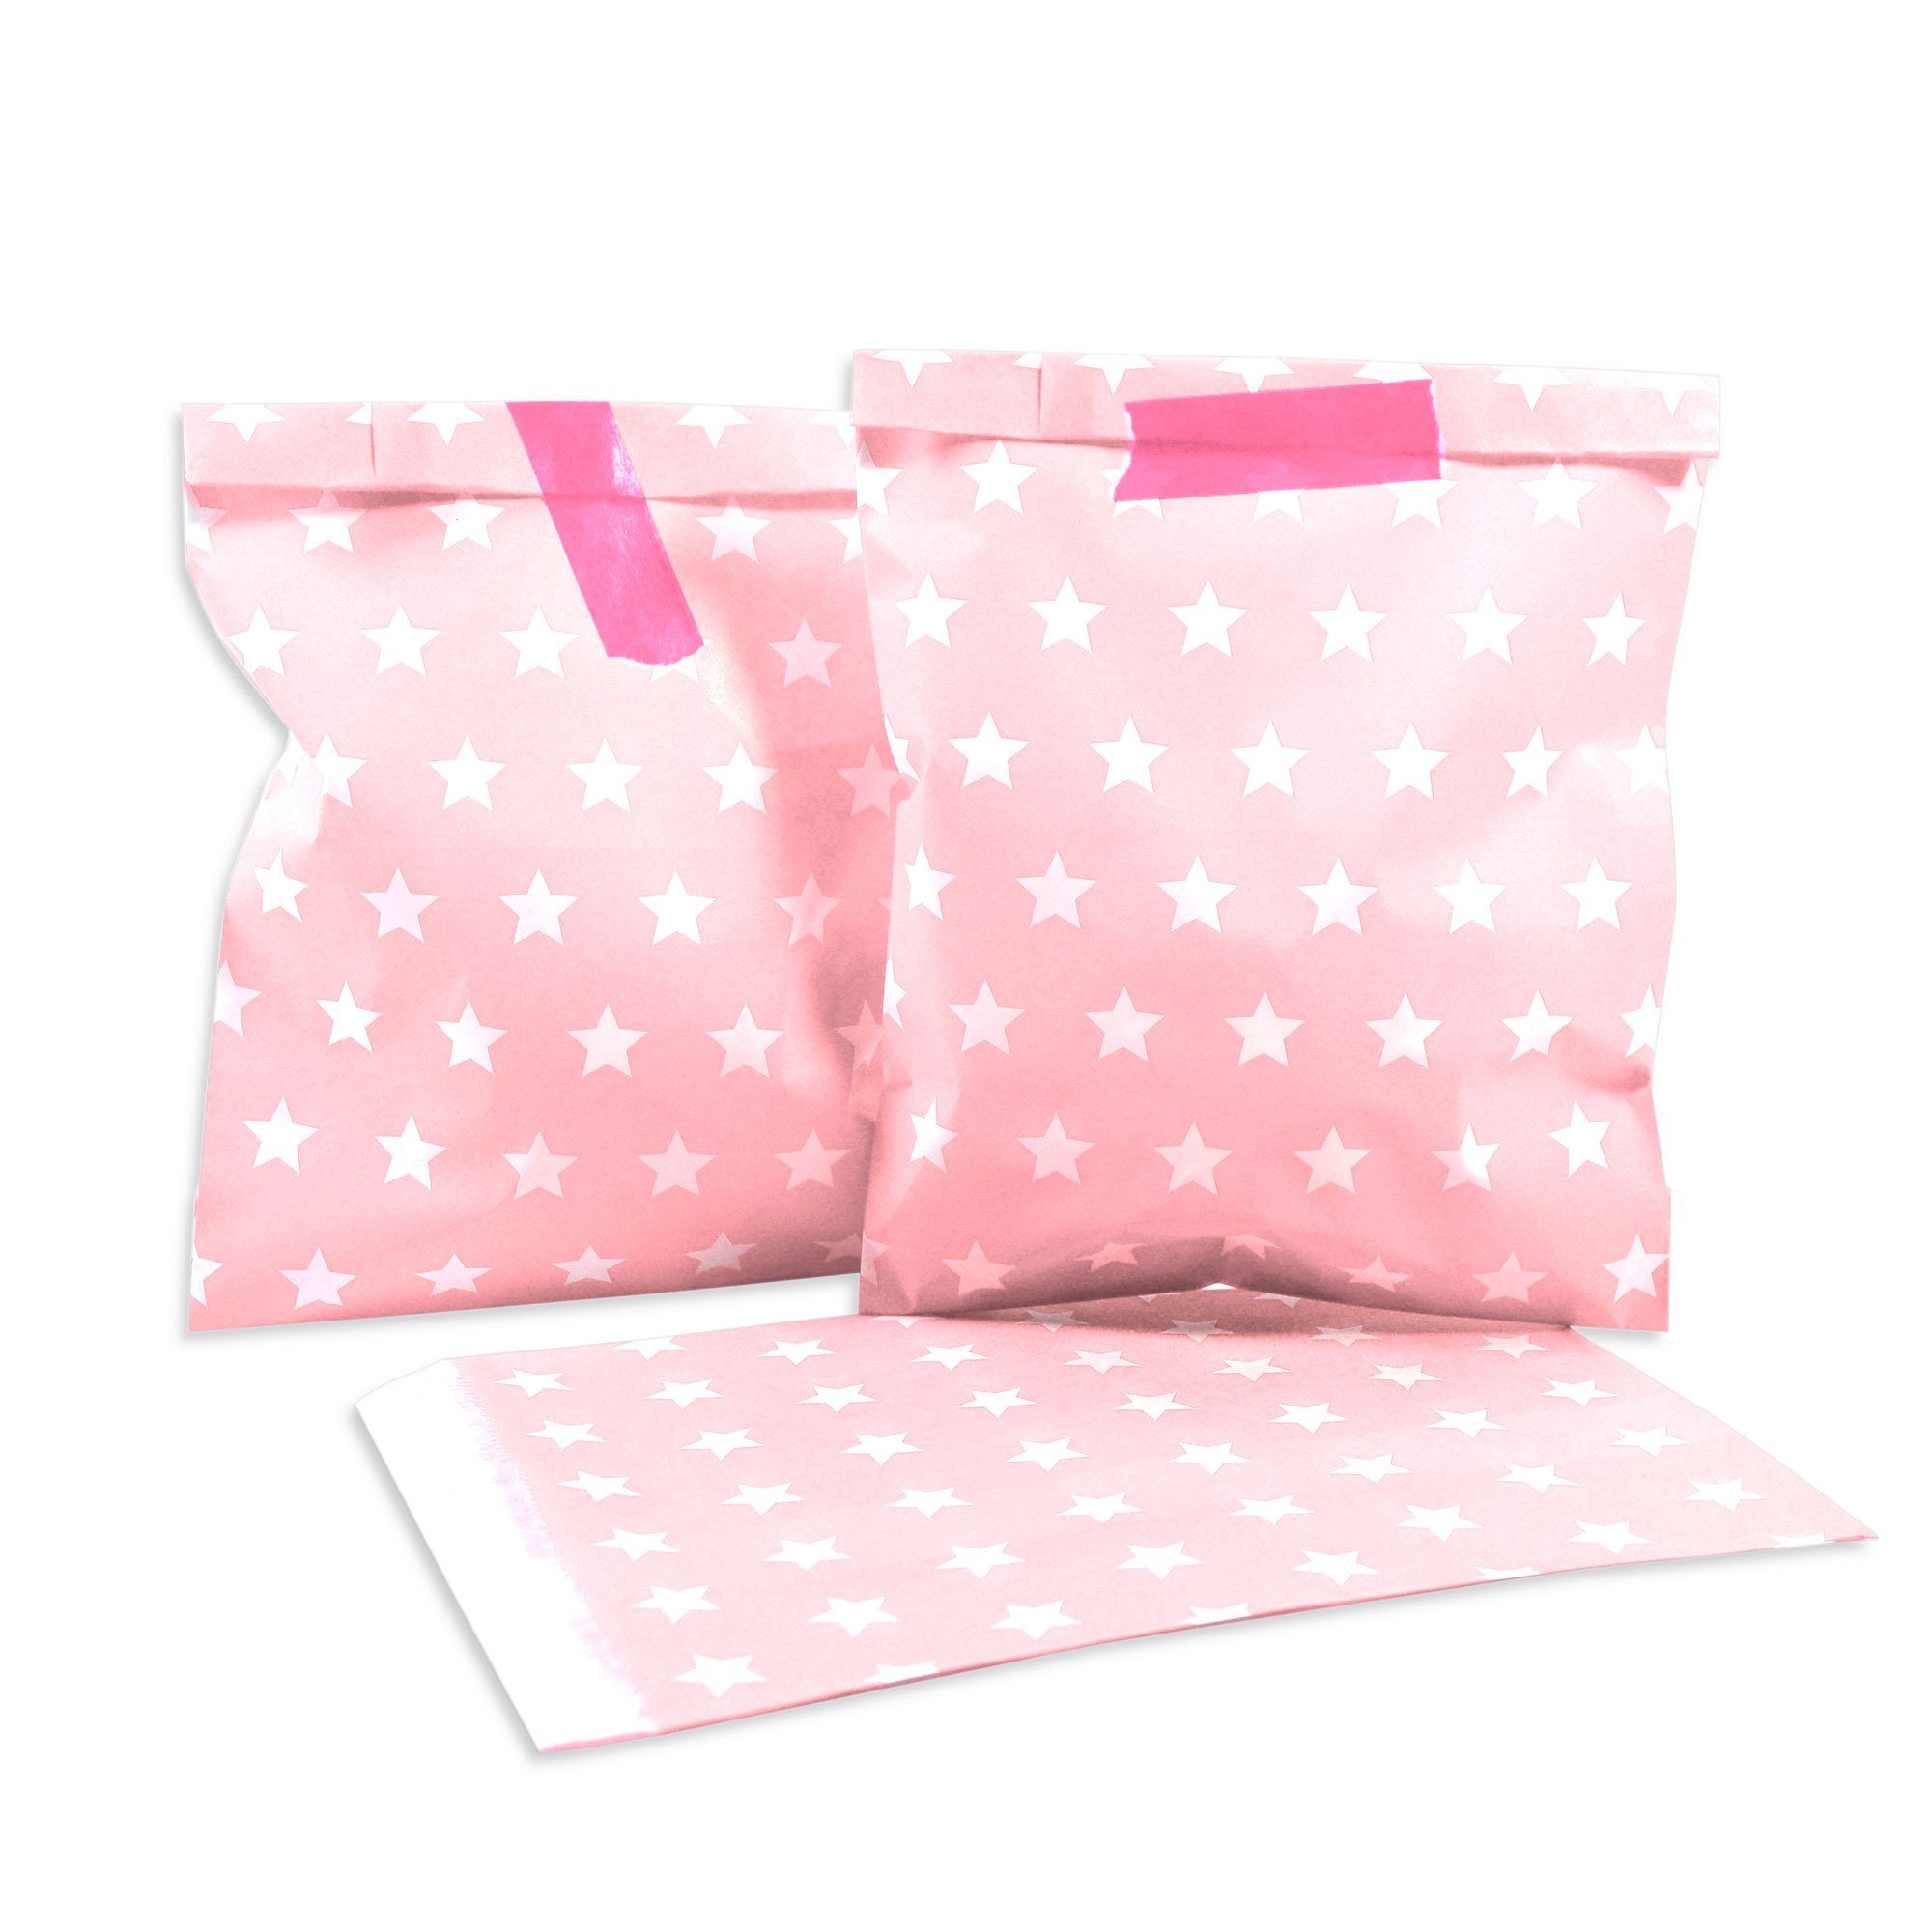 Frau WUNDERVoll Papierdekoration Papiertüten - rosa, weiße Sterne